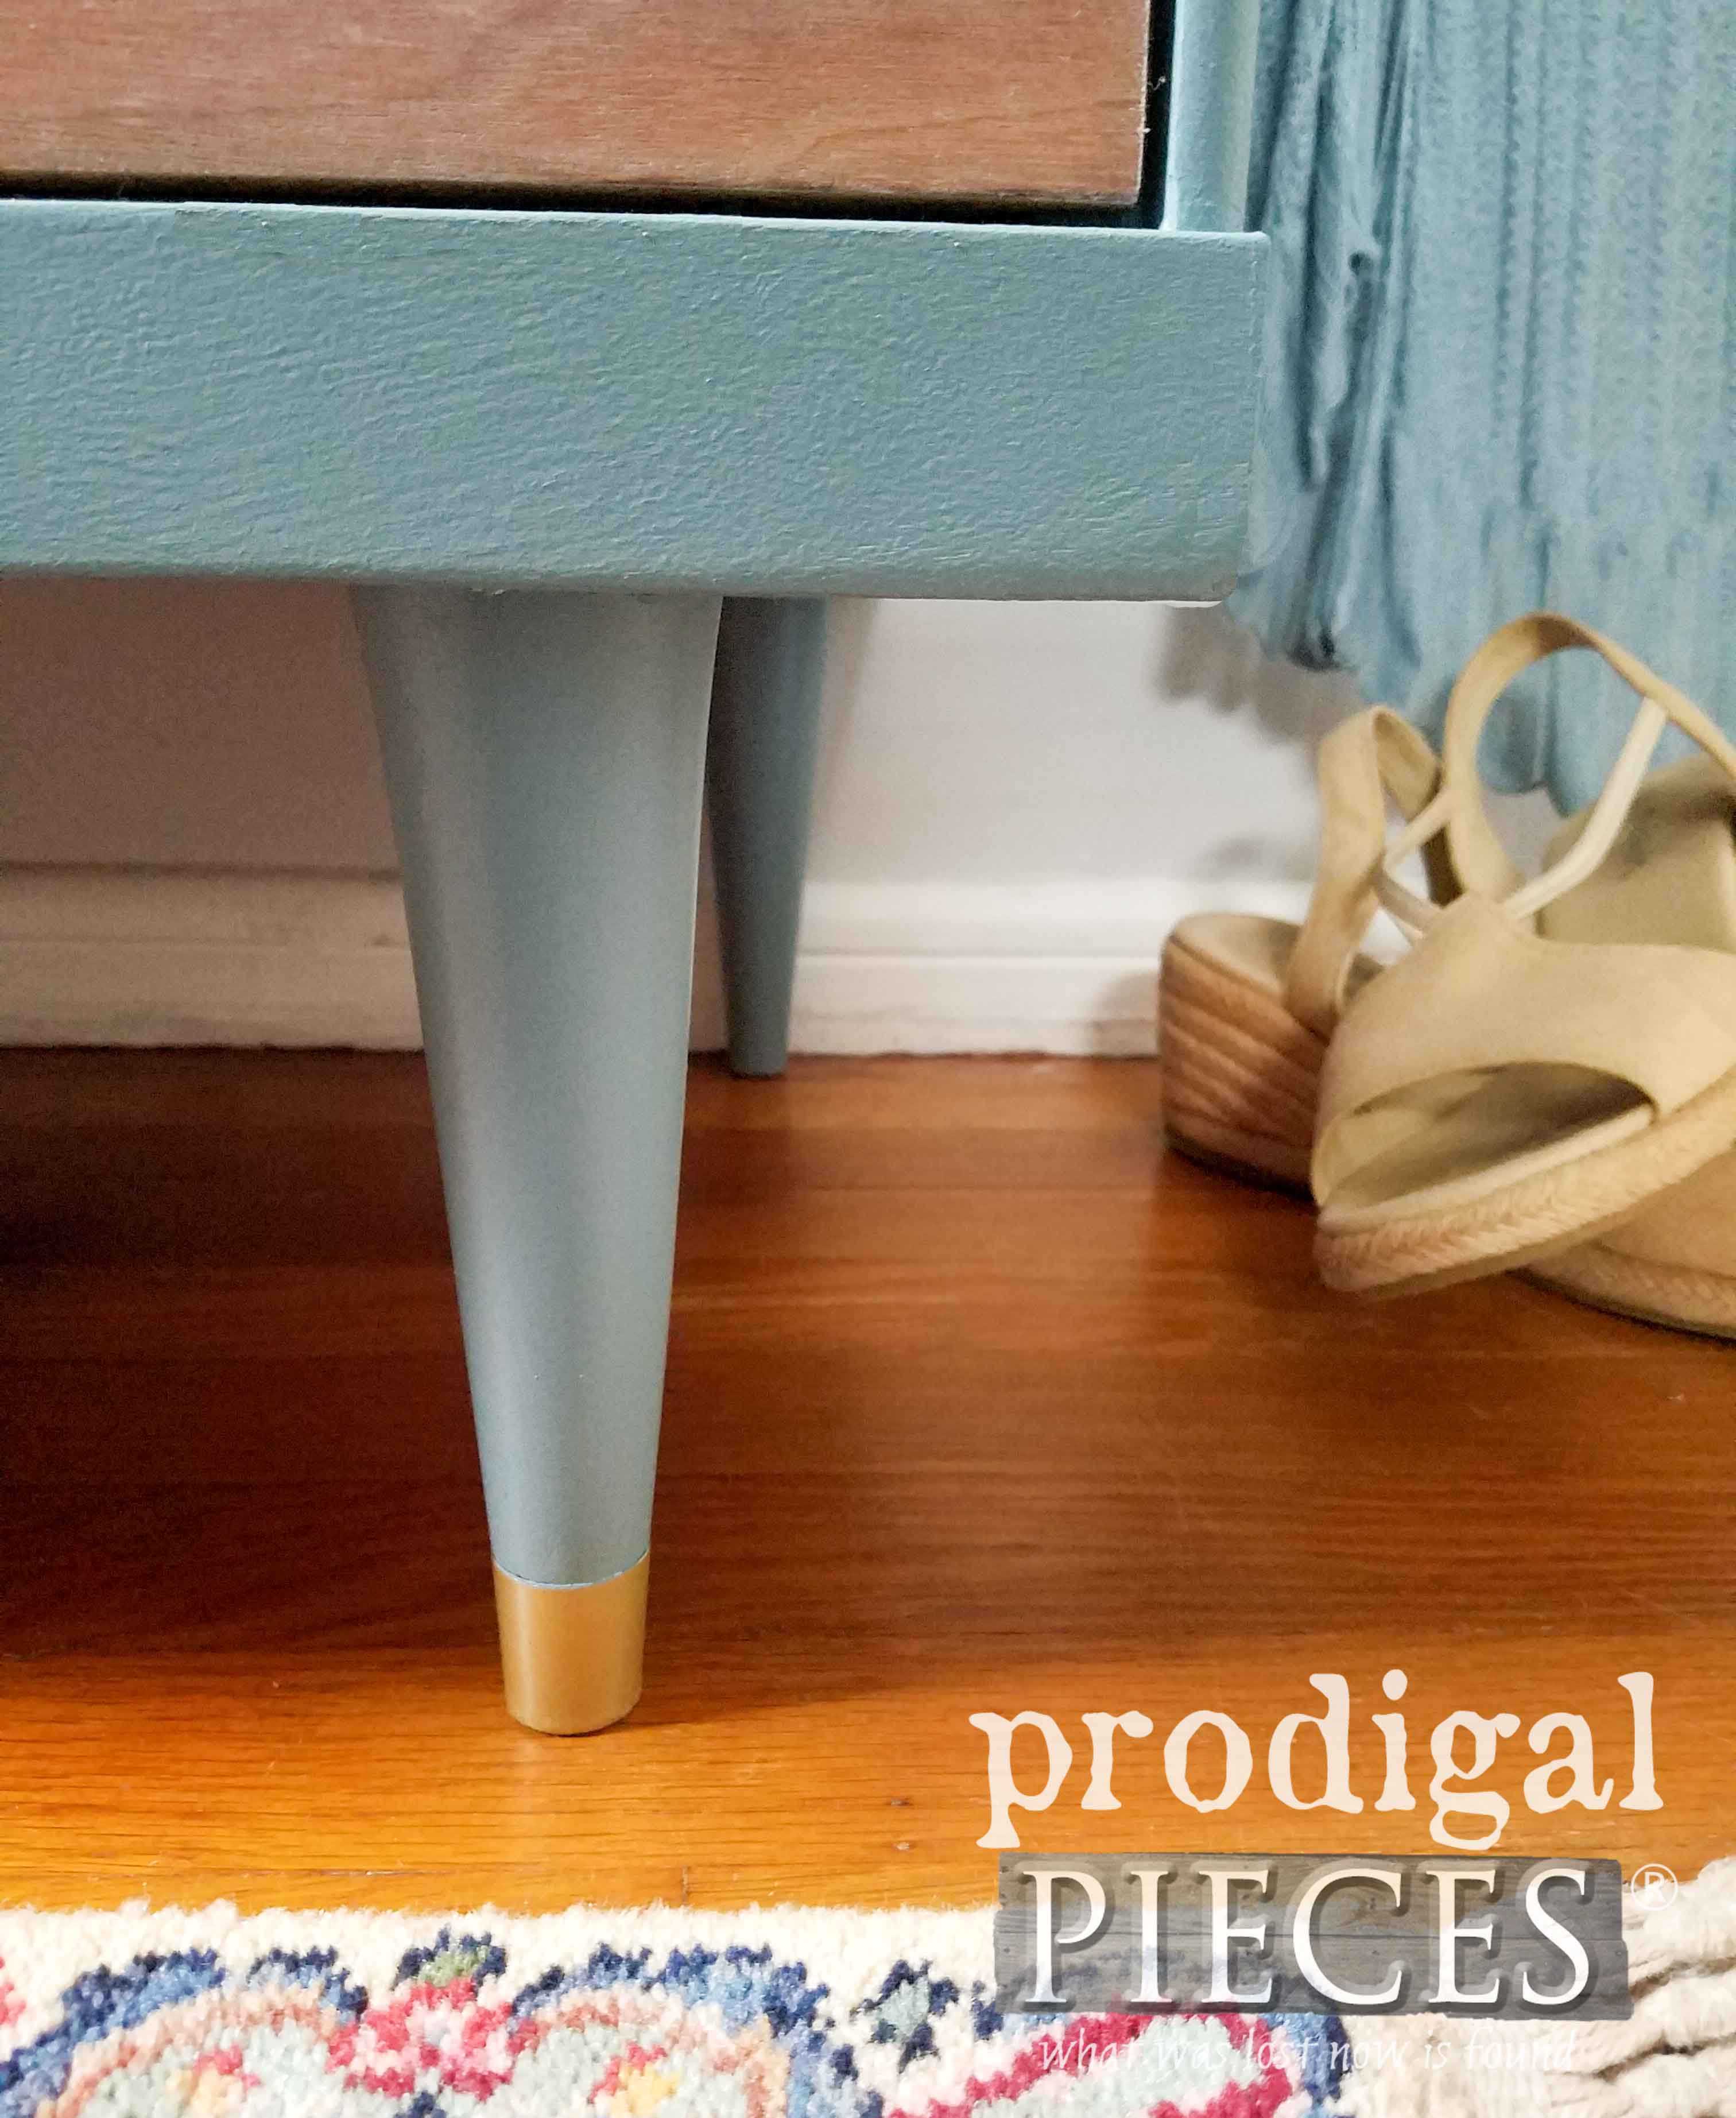 Gold Accents on Mid Century Modern Bassett Dresser by Larissa of Prodigal Pieces | prodigalpieces.com